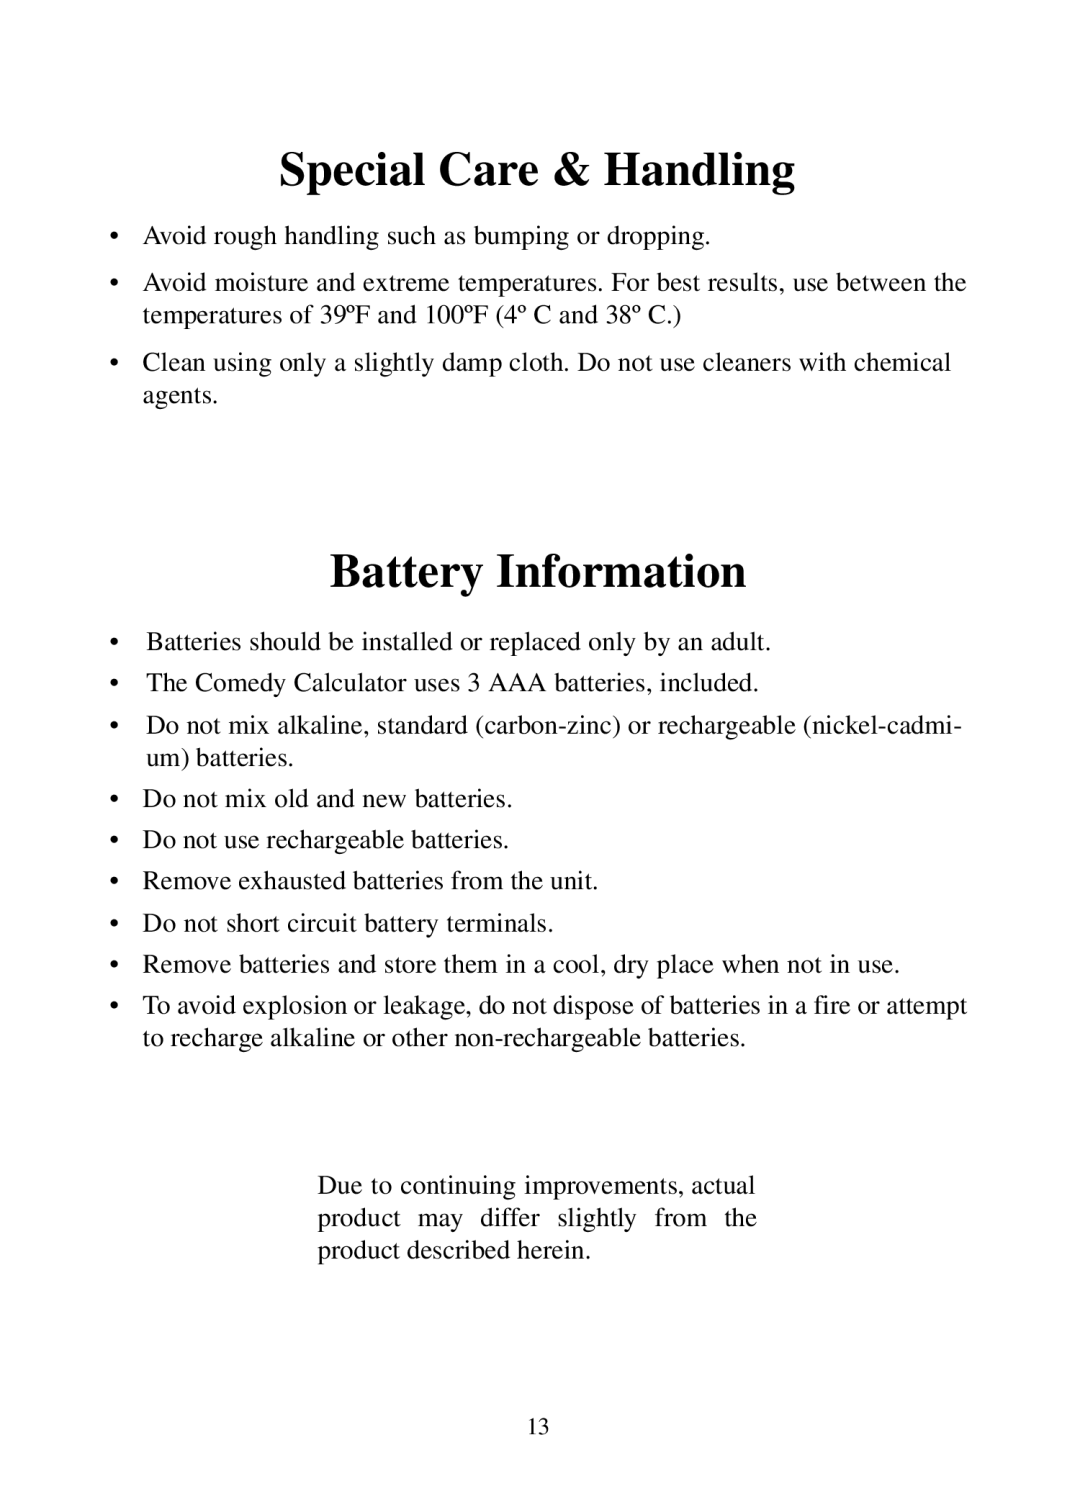 Excalibur electronic JK01 manual Special Care & Handling, Battery Information 